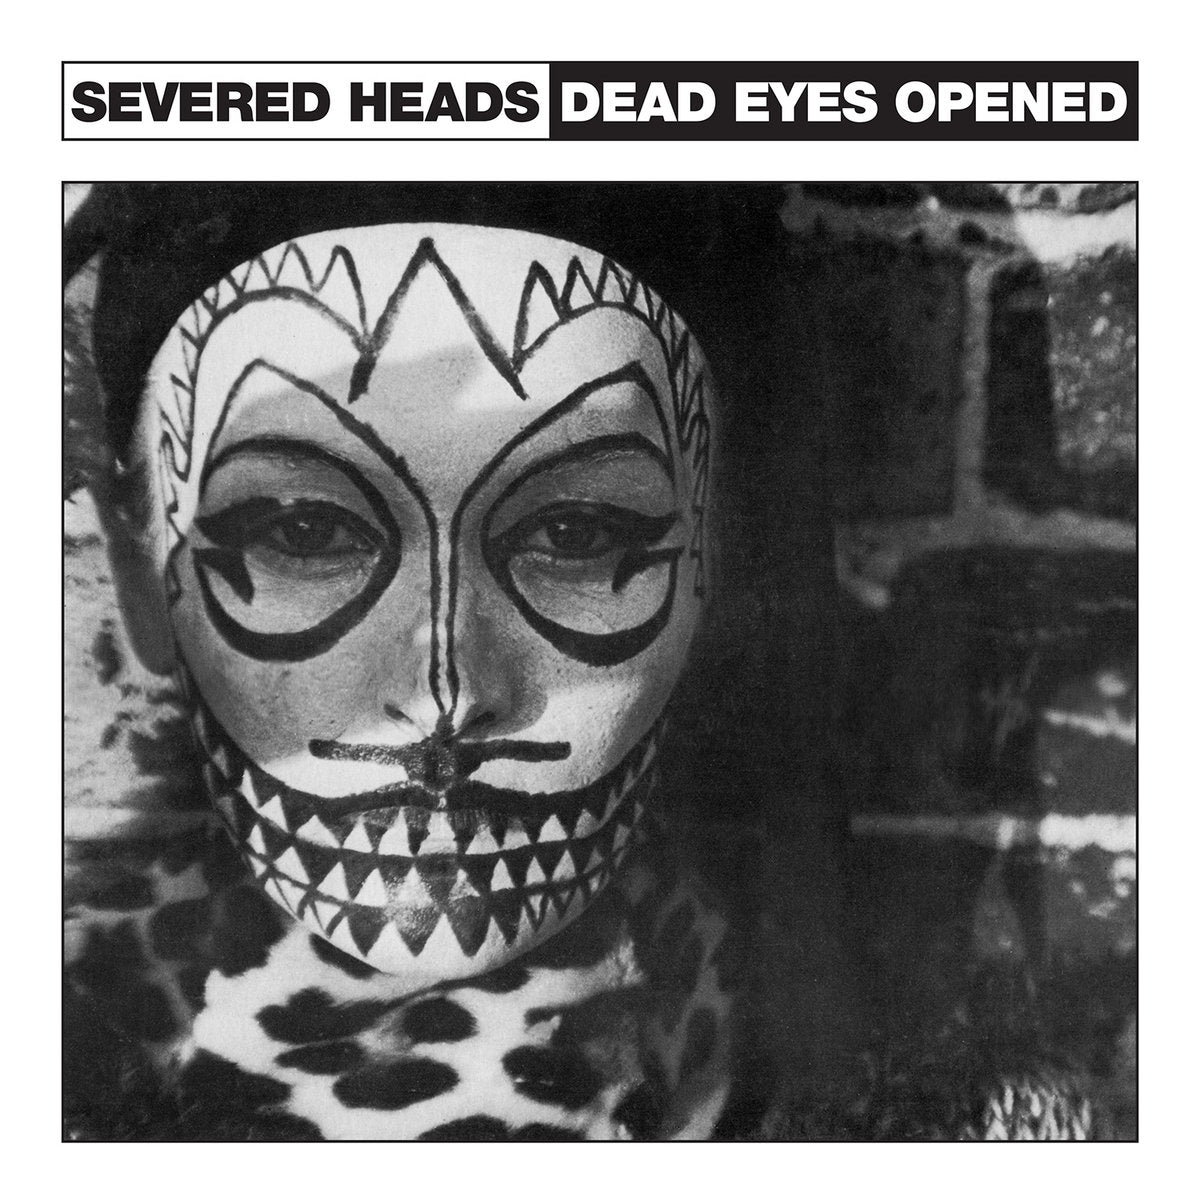 SEVERED HEADS - "DEAD EYES OPENED" 12"